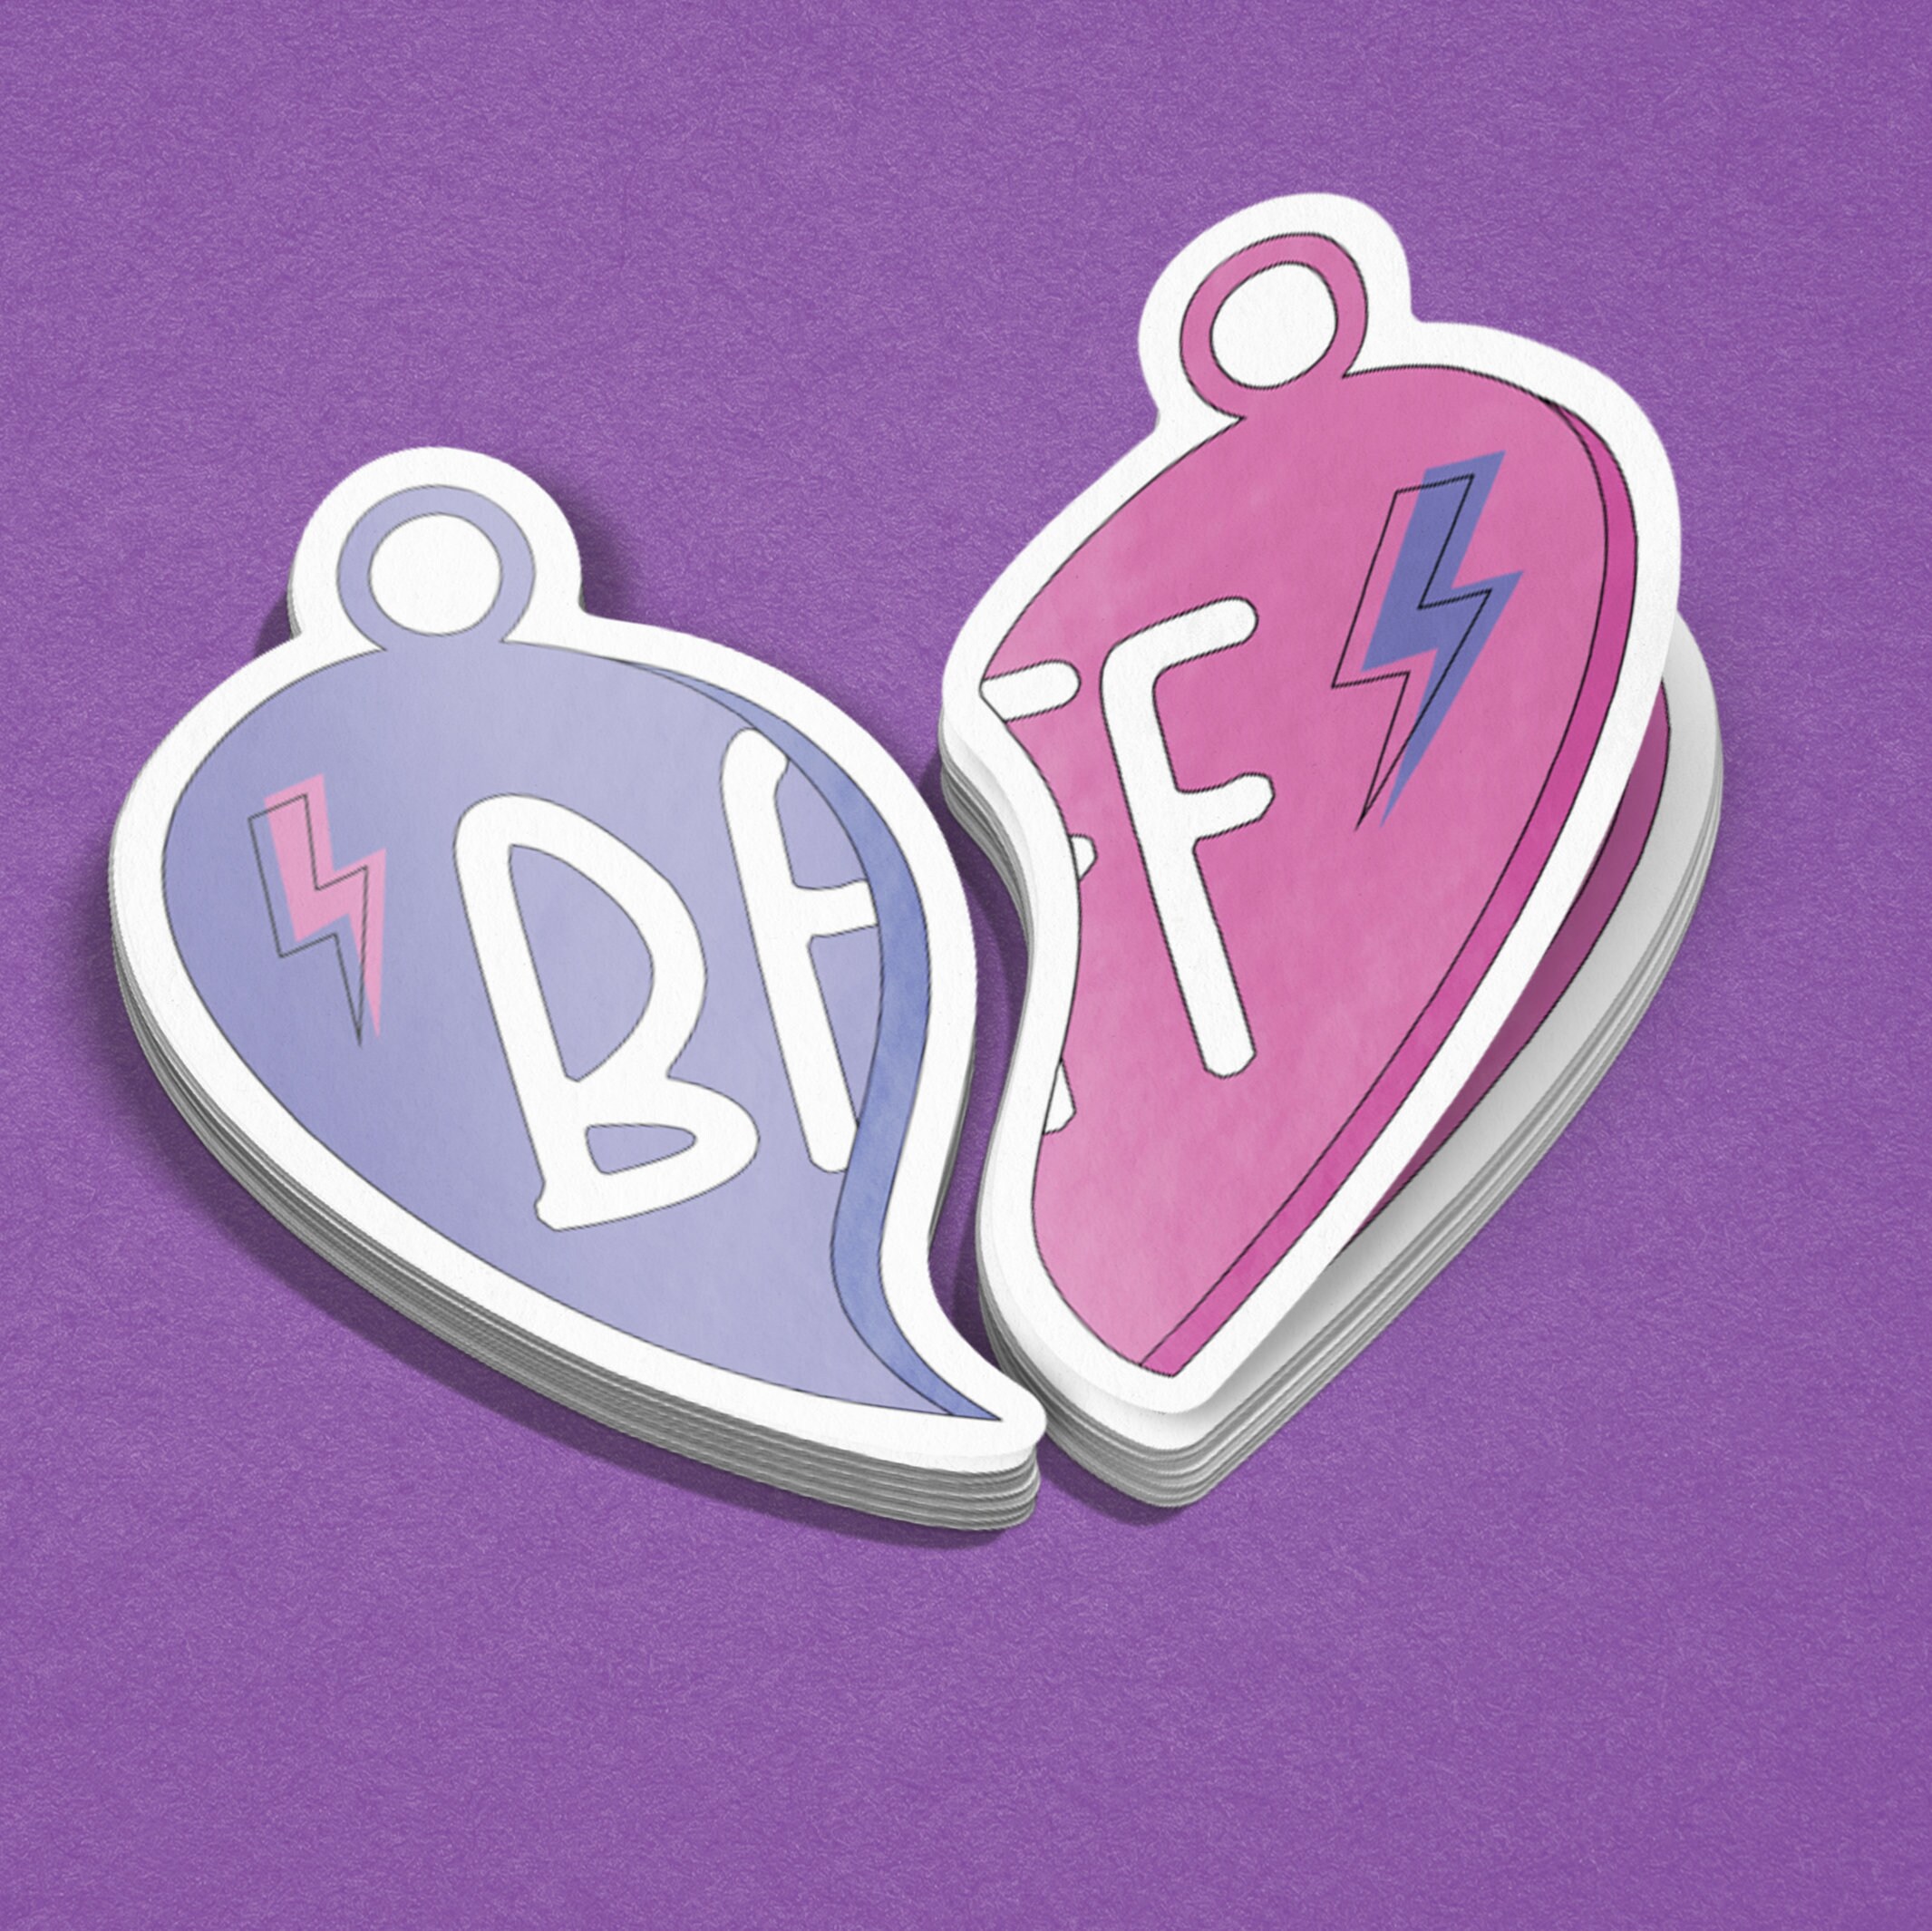 BFF Heart Sticker